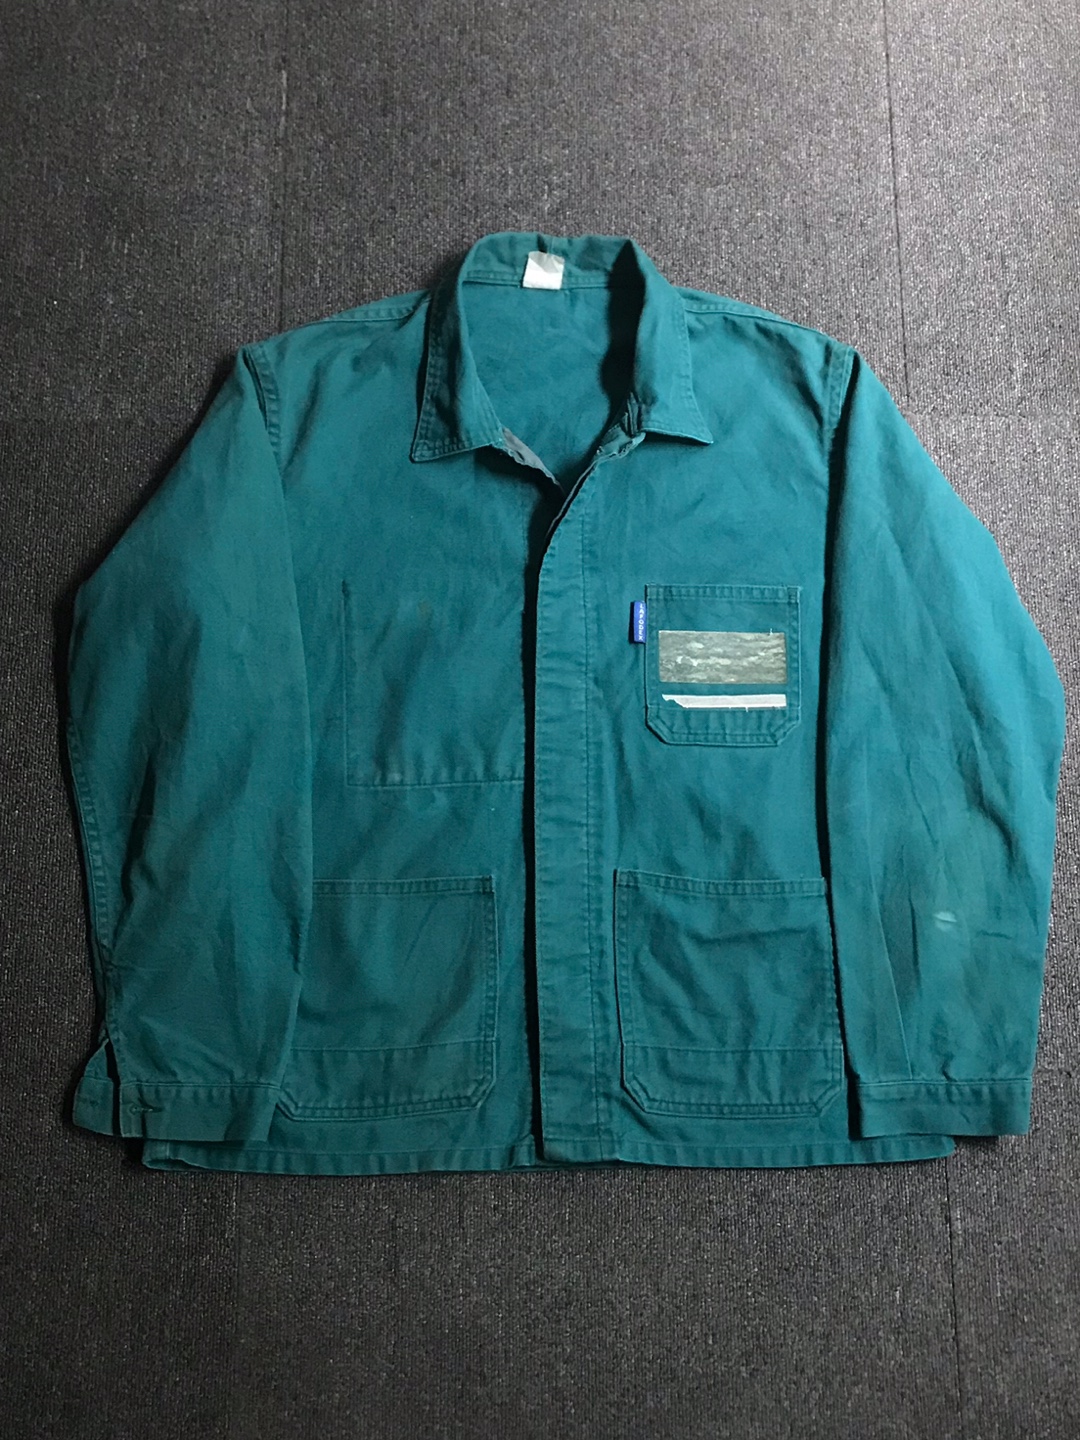 lafodex cotton twill french work jacket (~105 추천)